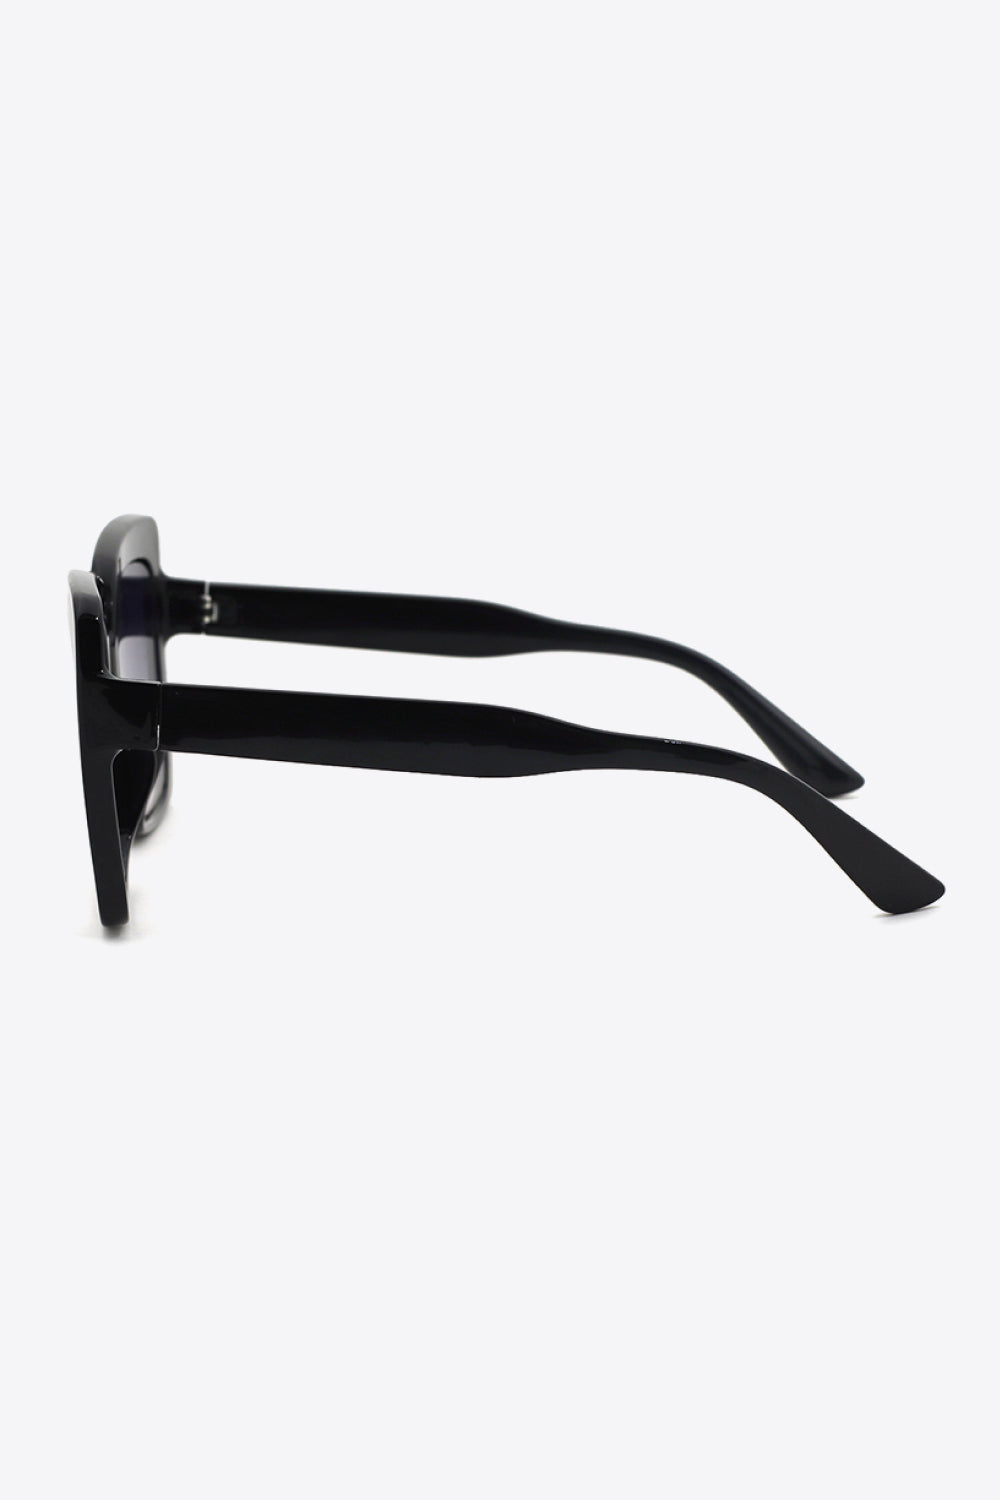 Square Full Rim Sunglasses Black One Size Sunglasses by Vim&Vigor | Vim&Vigor Boutique